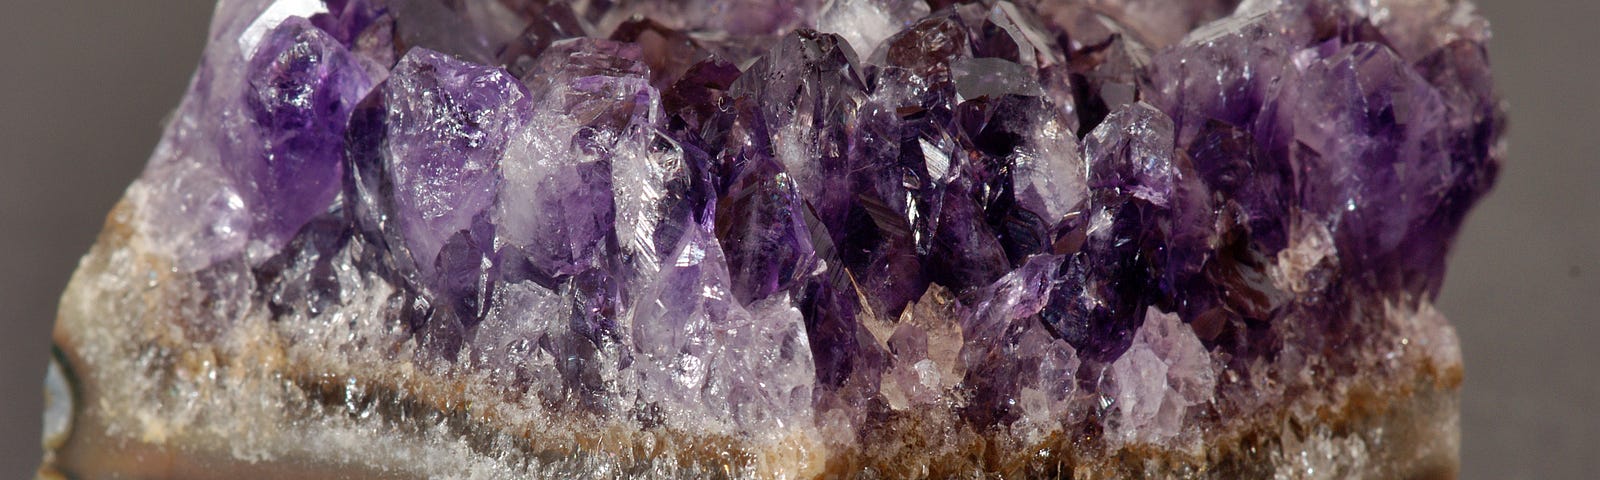 a purple gem stone is displayed